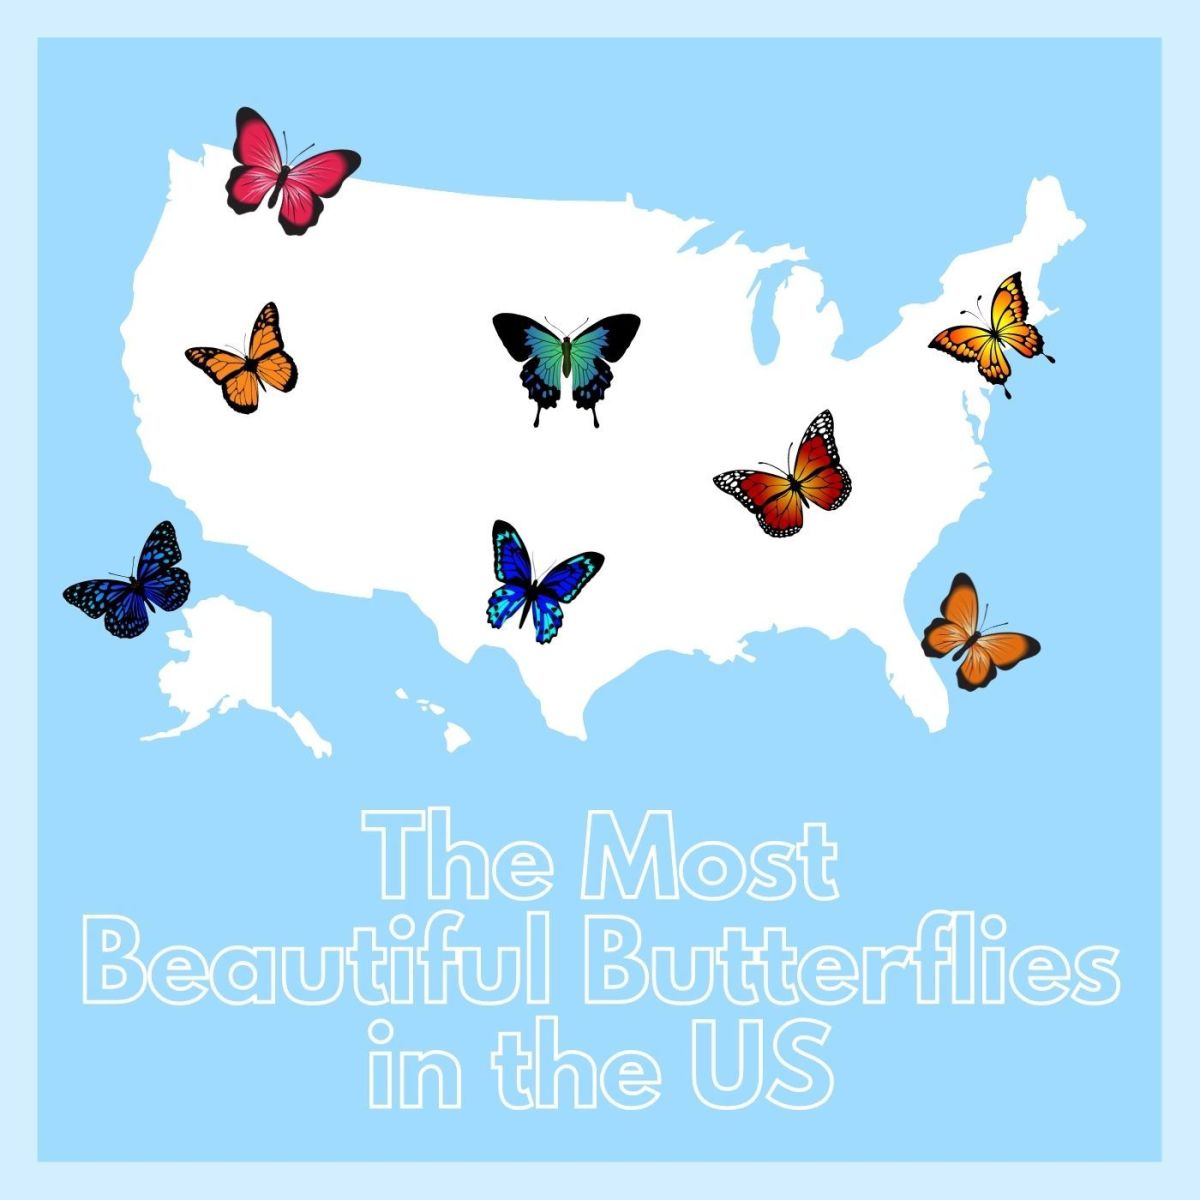 Top 10 Beautiful Butterflies of the USA